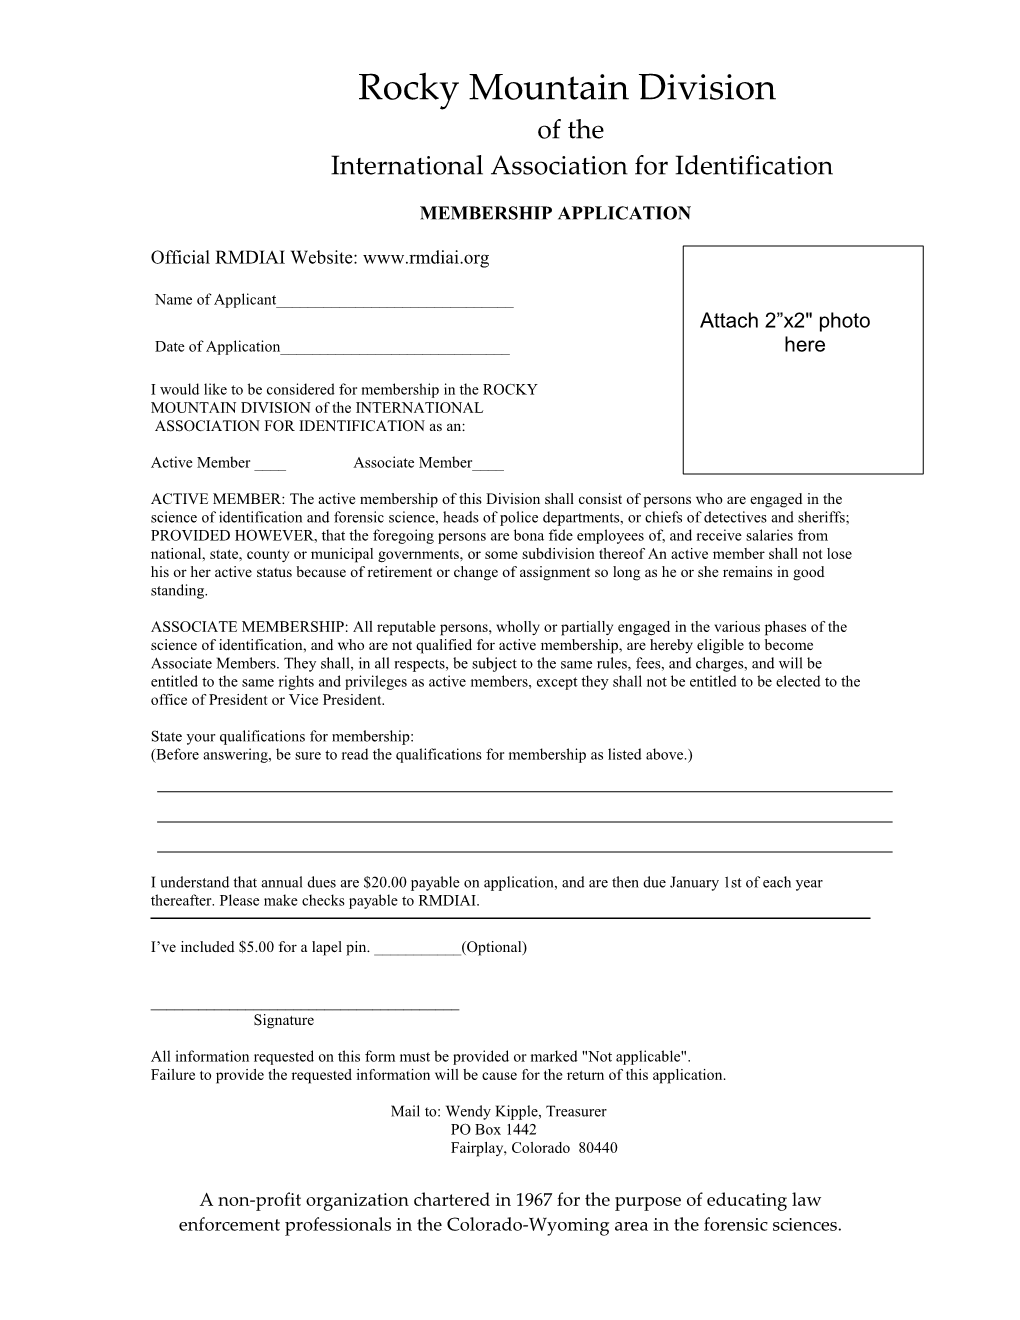 International Association for Identification